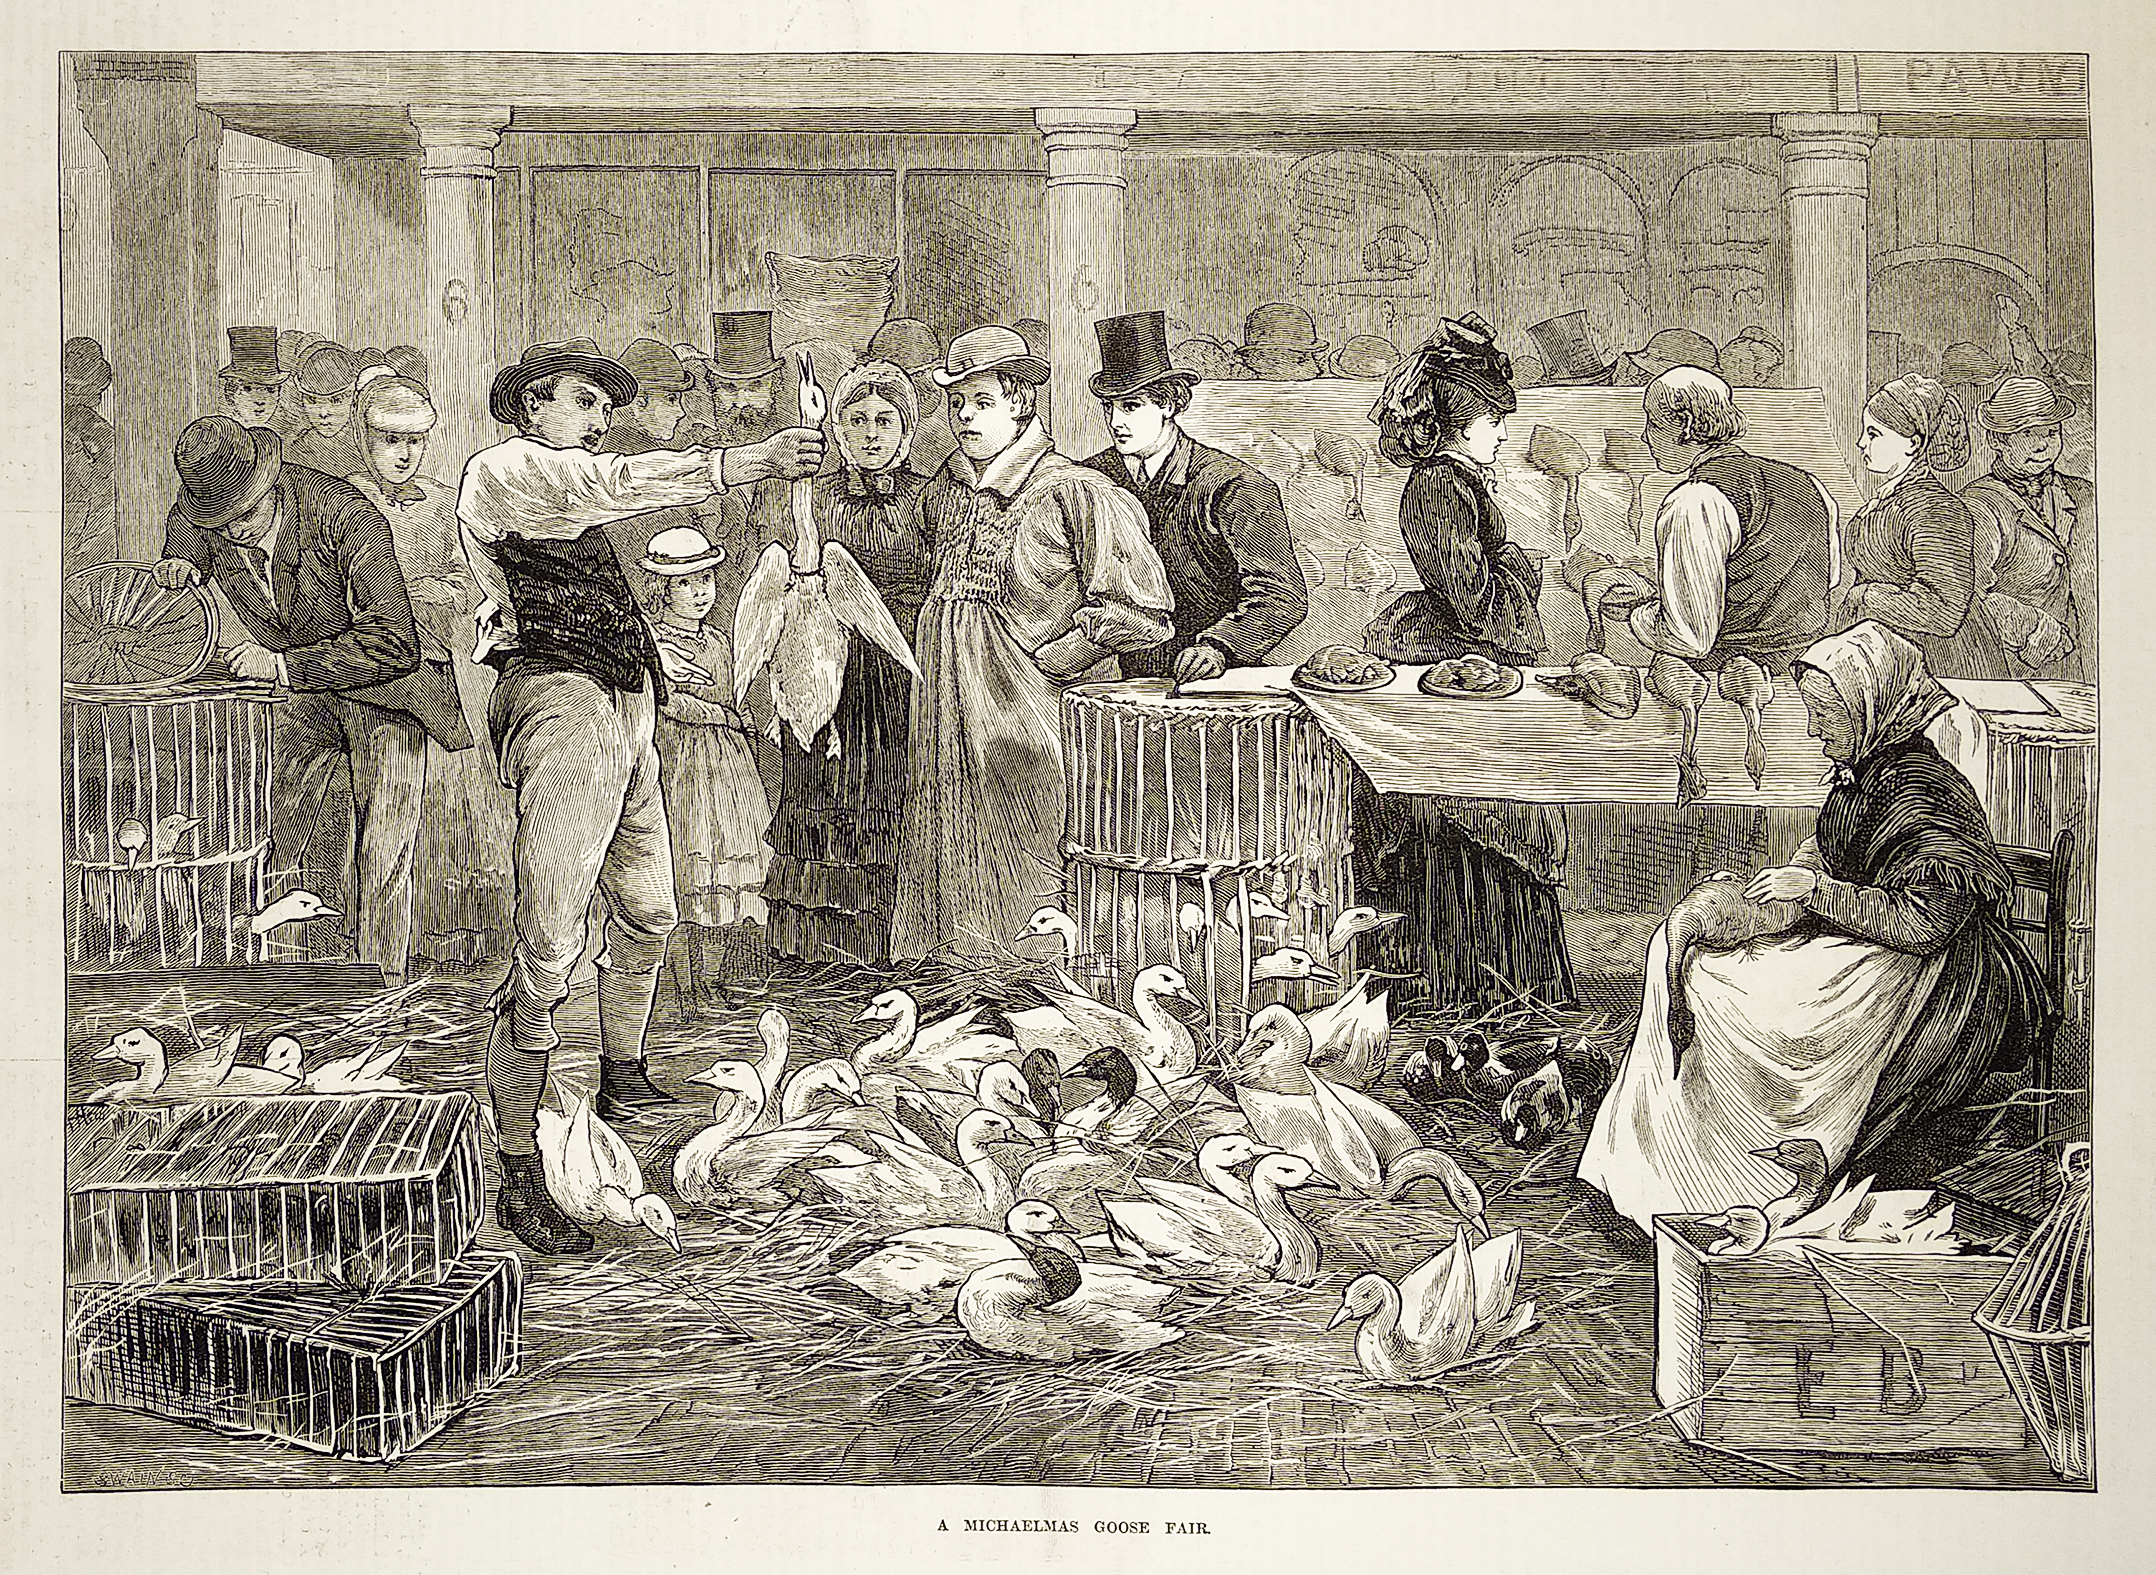 A Michaelmas goose fair. - Antique Print from 1873